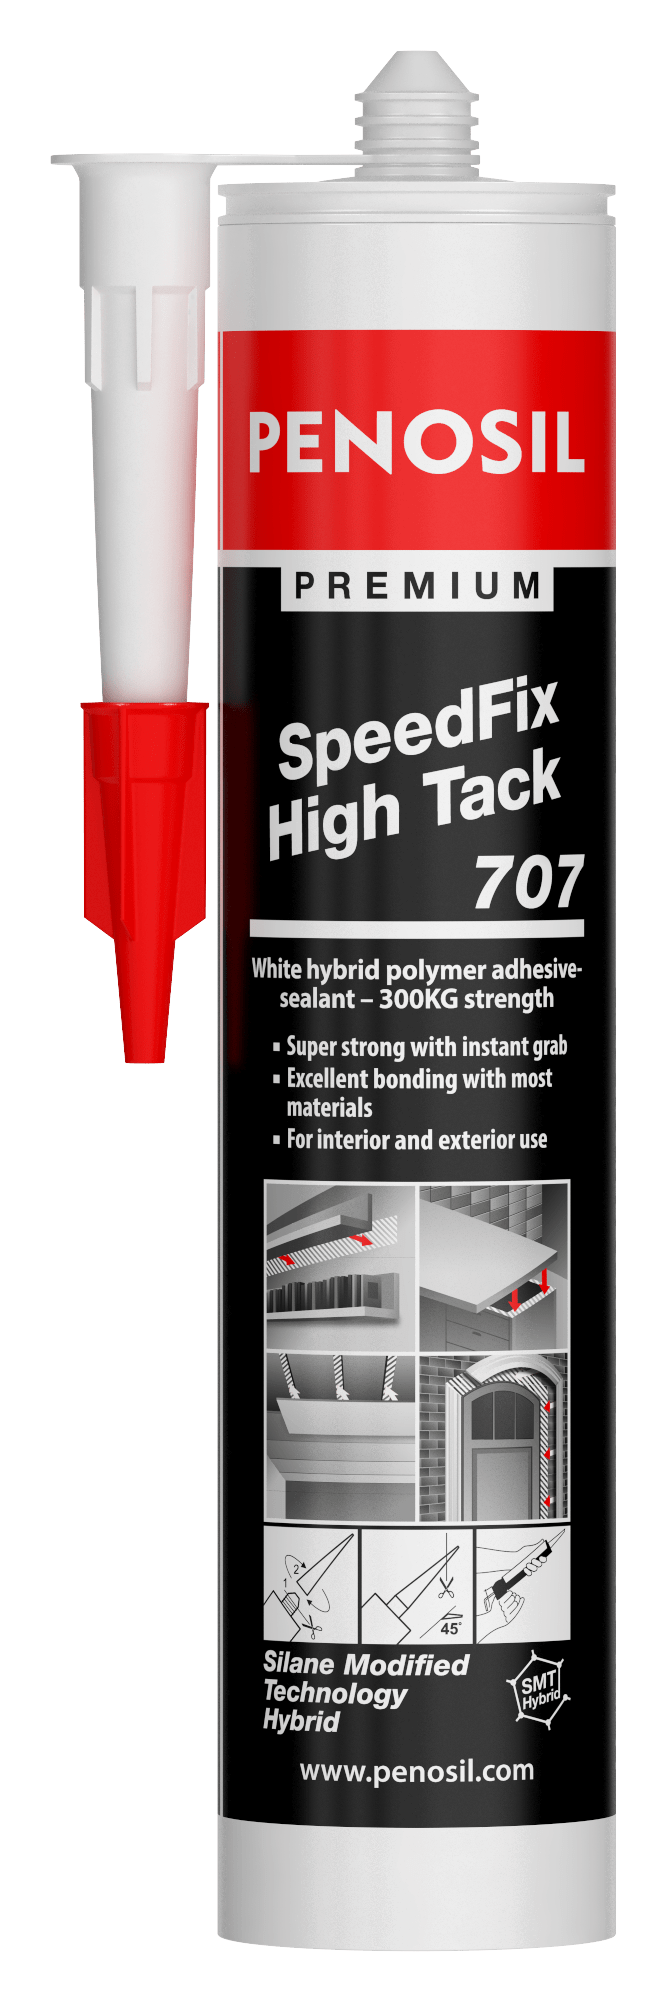 PENOSIL SpeedFix HighTack 707 adhesive